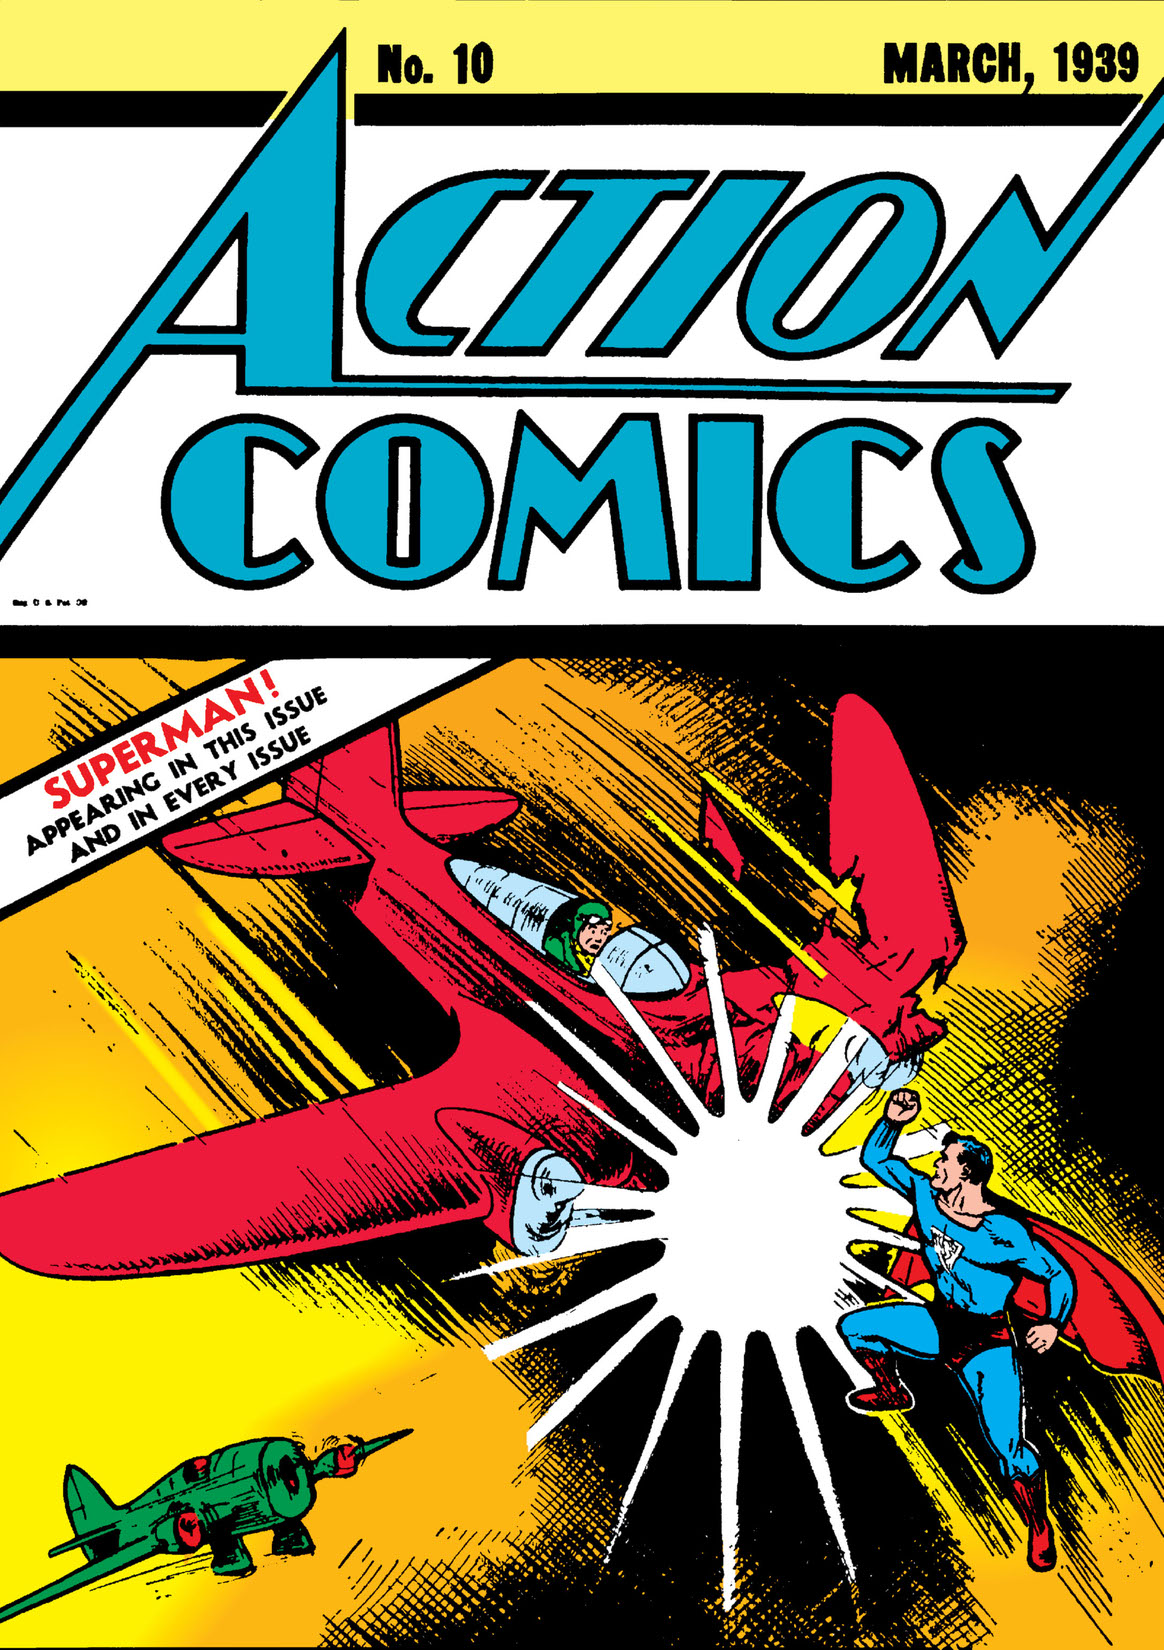 Action Comics (1938-) #10 preview images